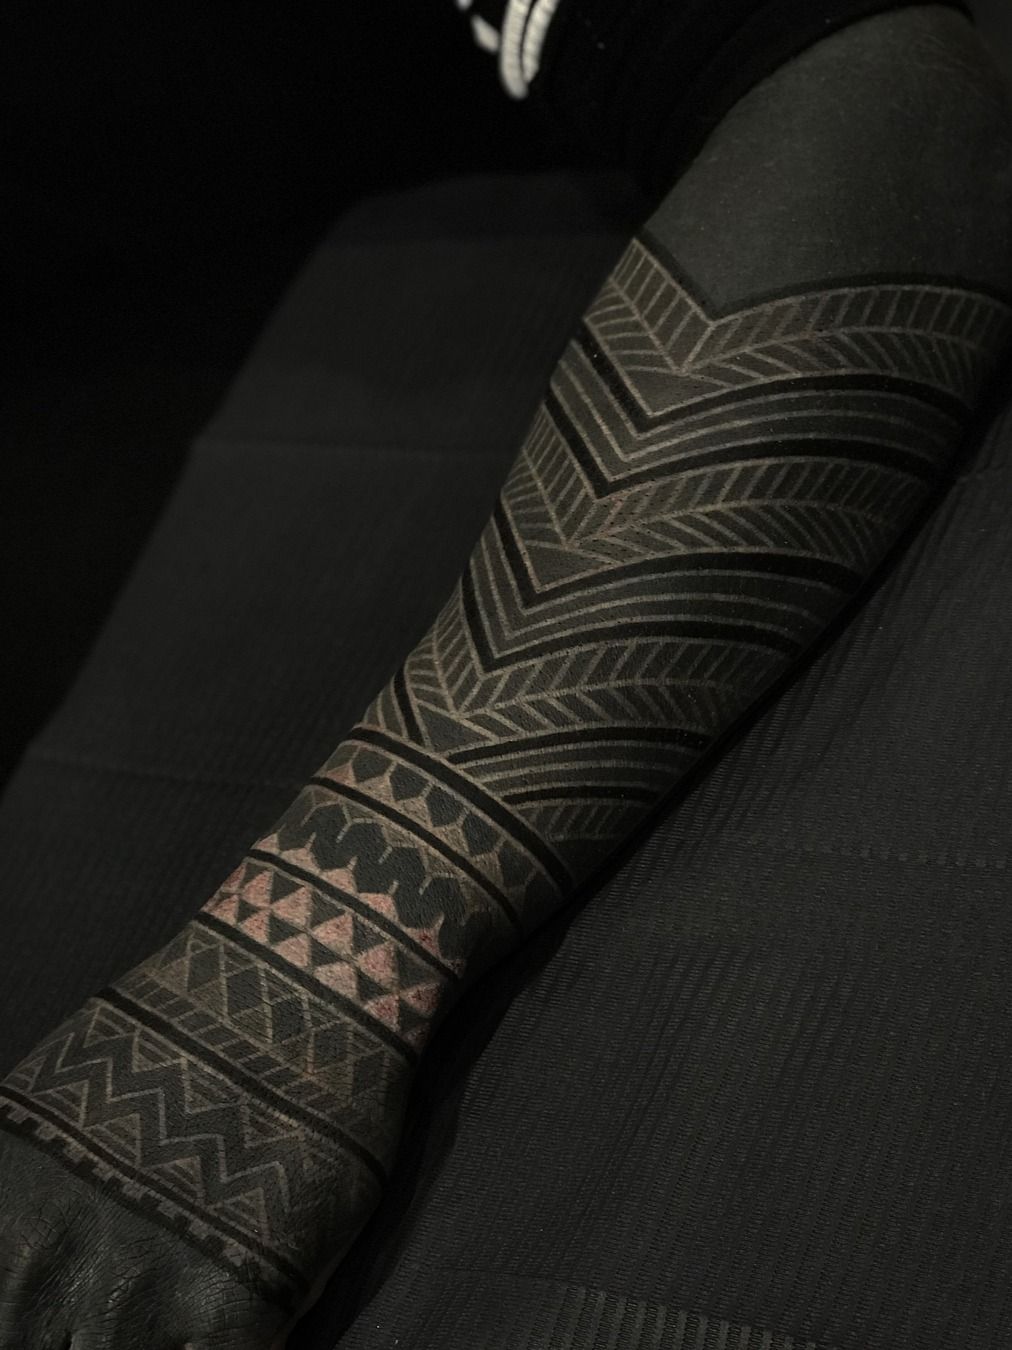 Black and white traditional tattoo design of a jugendstil pillar on Craiyon